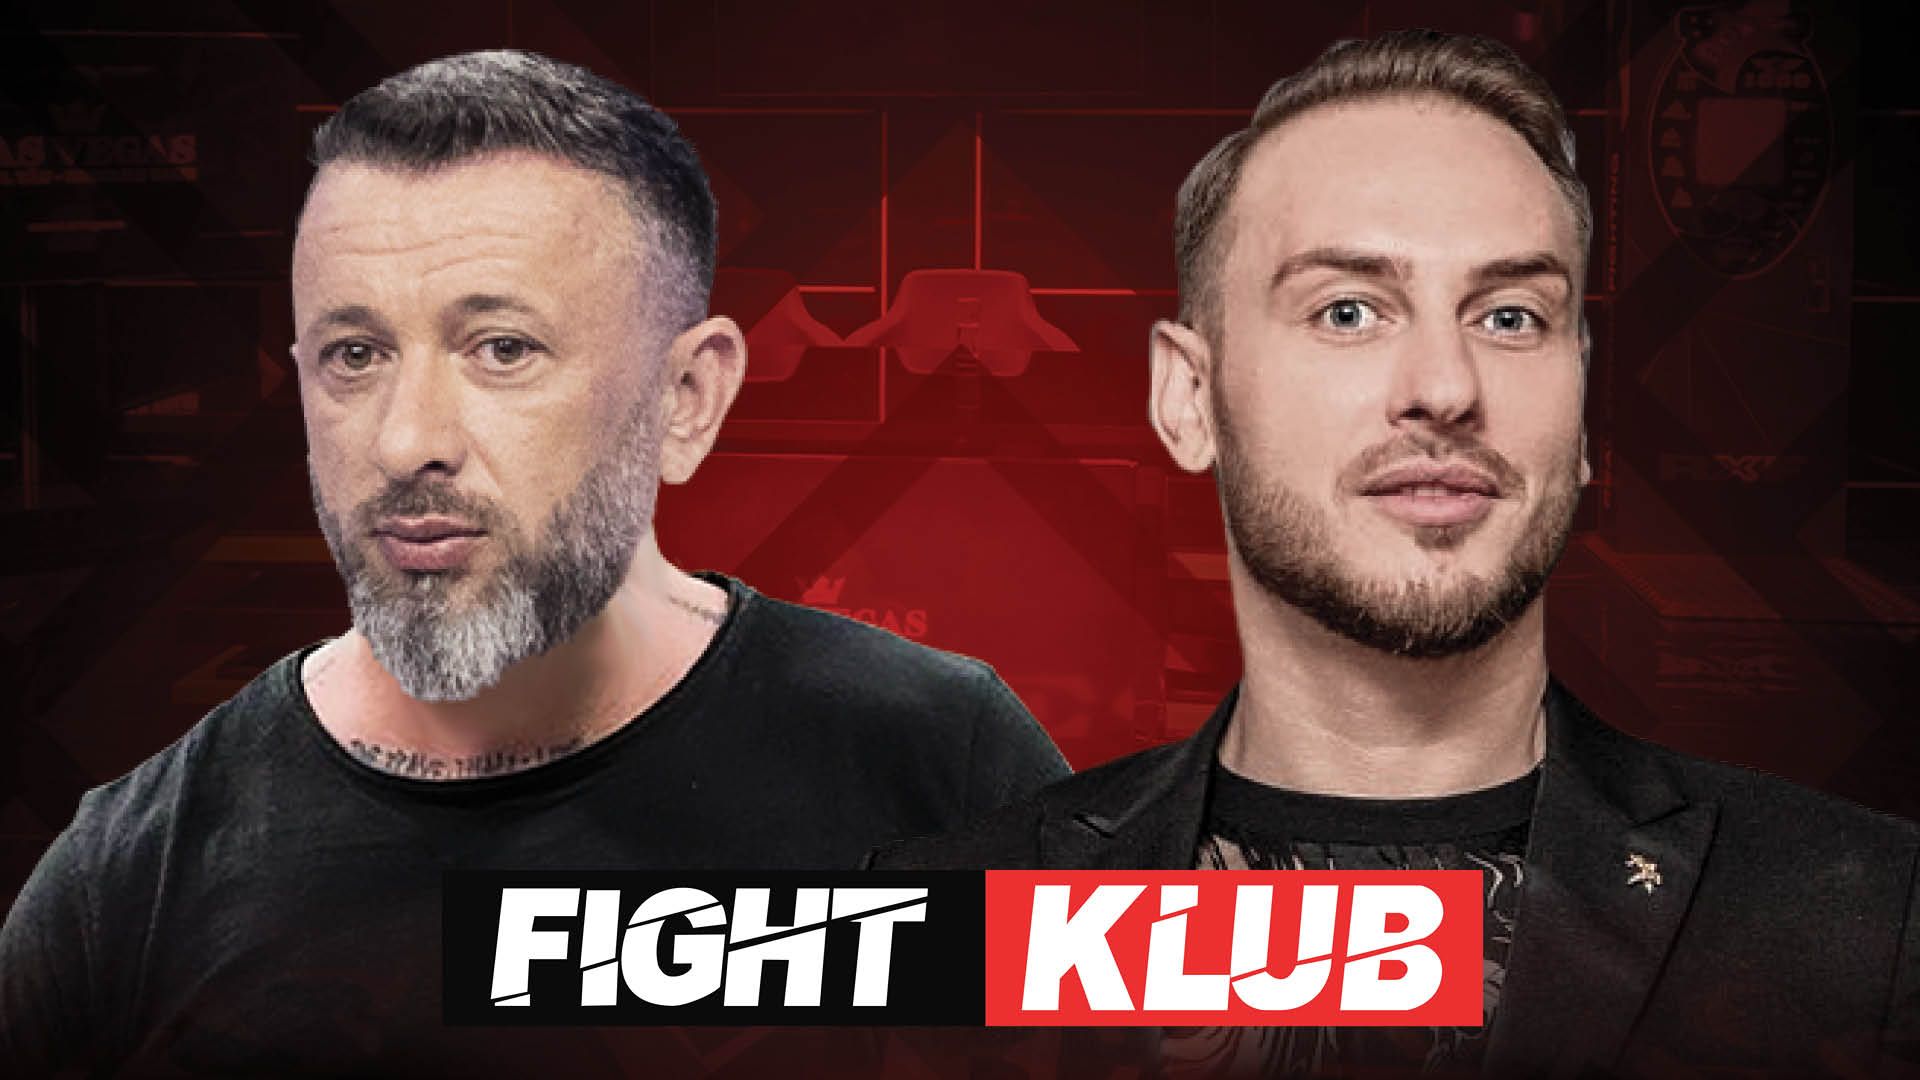 FIGHT+KLUB+Sebastian+Vieru+si+Eugen+Constantin+Vidineac.jpg